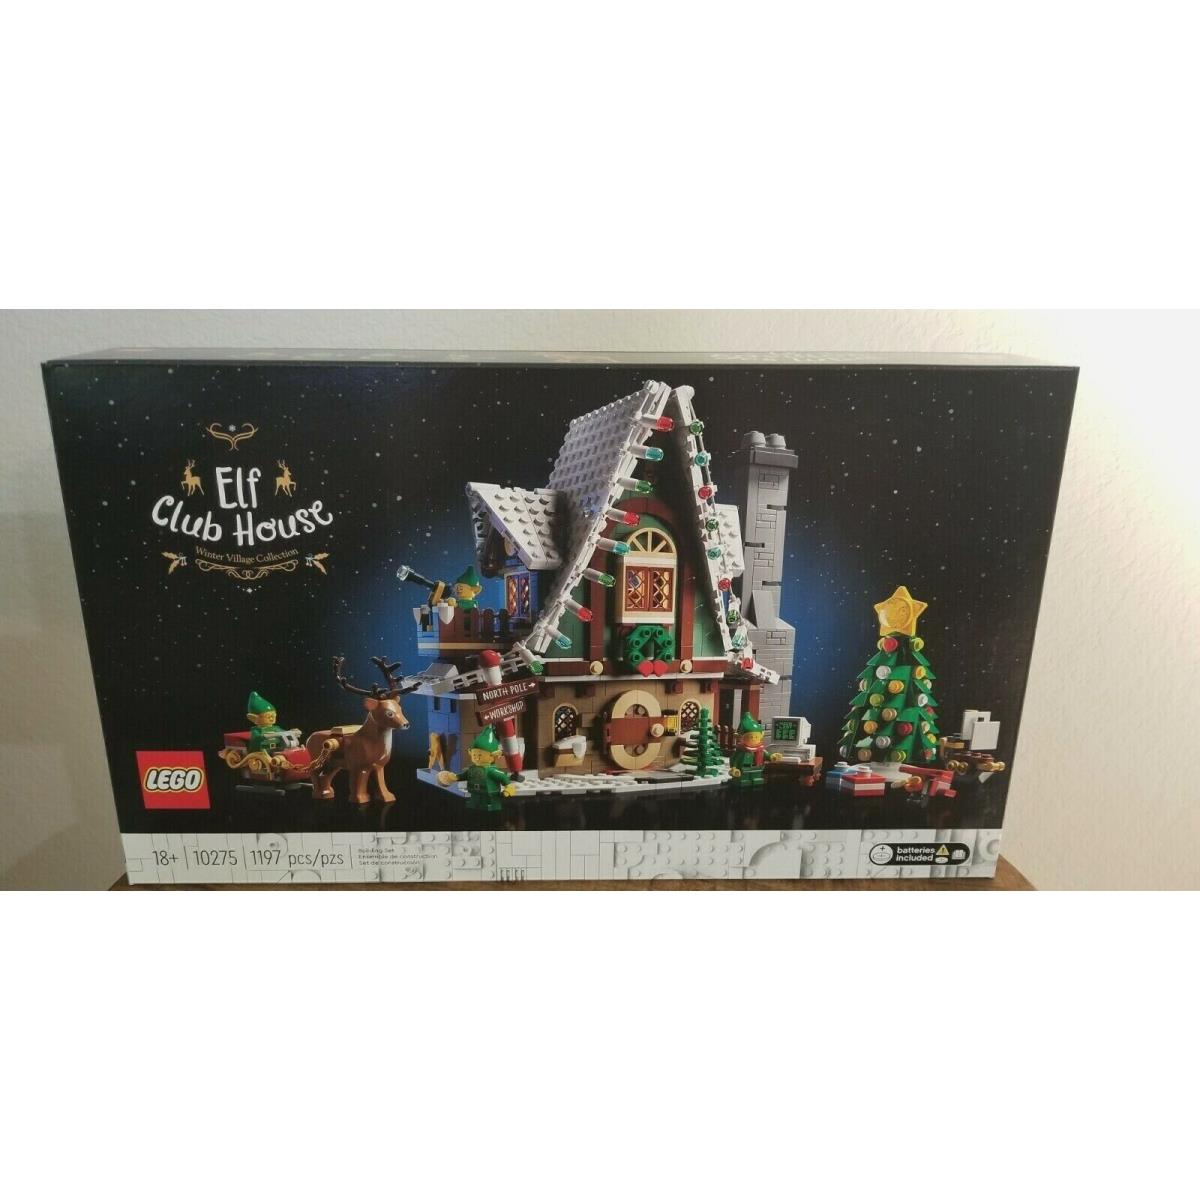 Lego 10275 Creator Elf Club House 1197 Piece Building Set - IN H